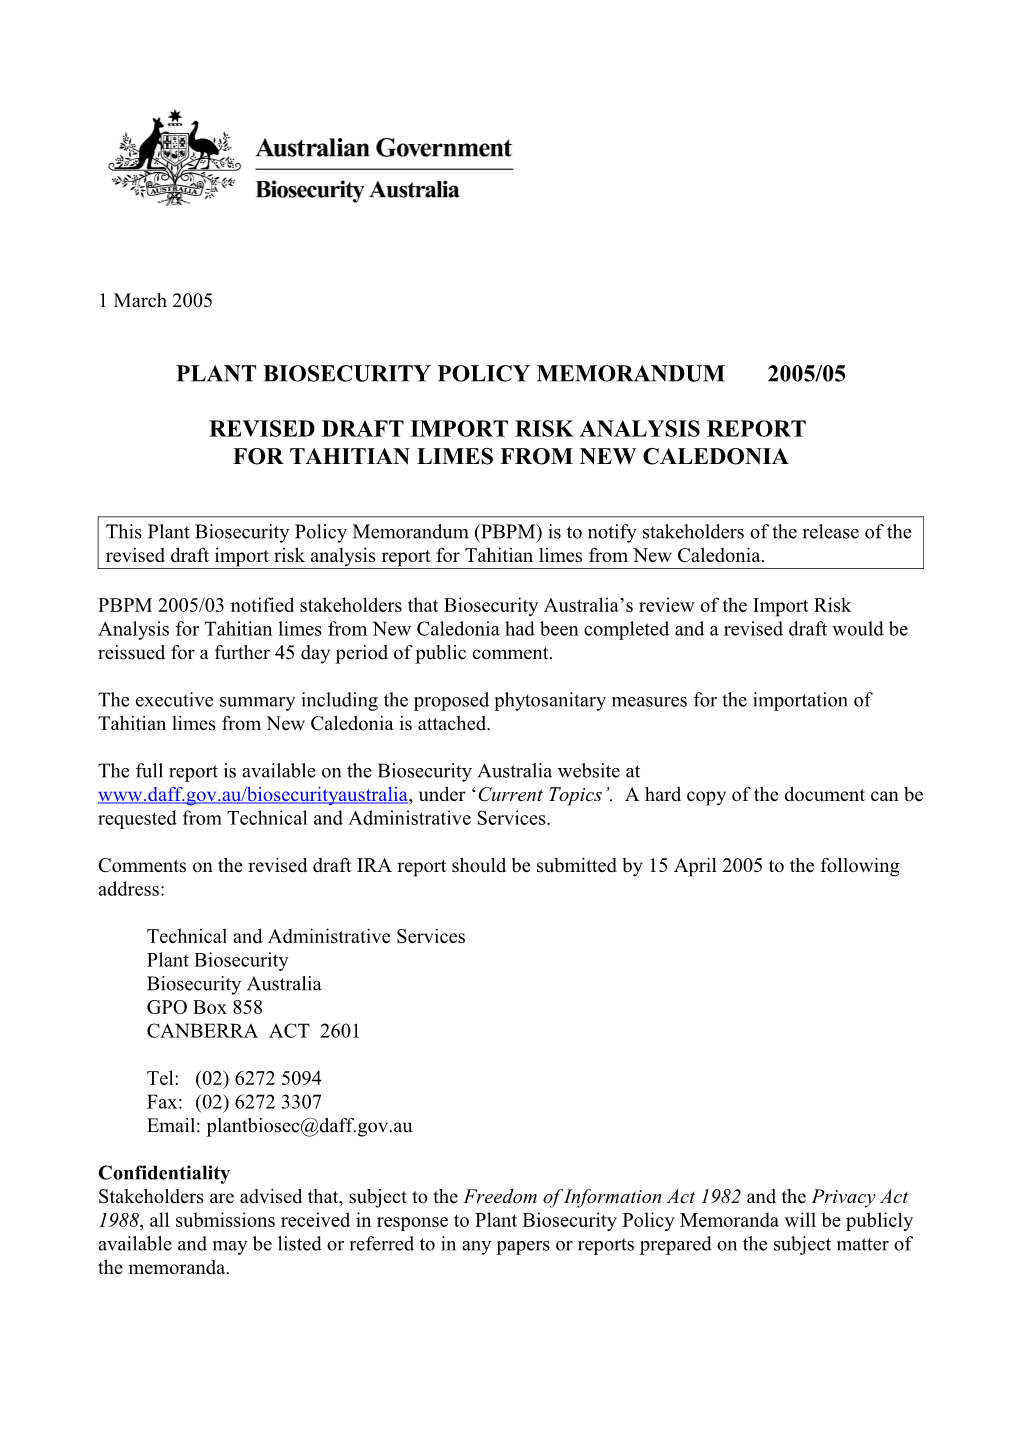 Plant Biosecurity Policy Memorandum 2005/05